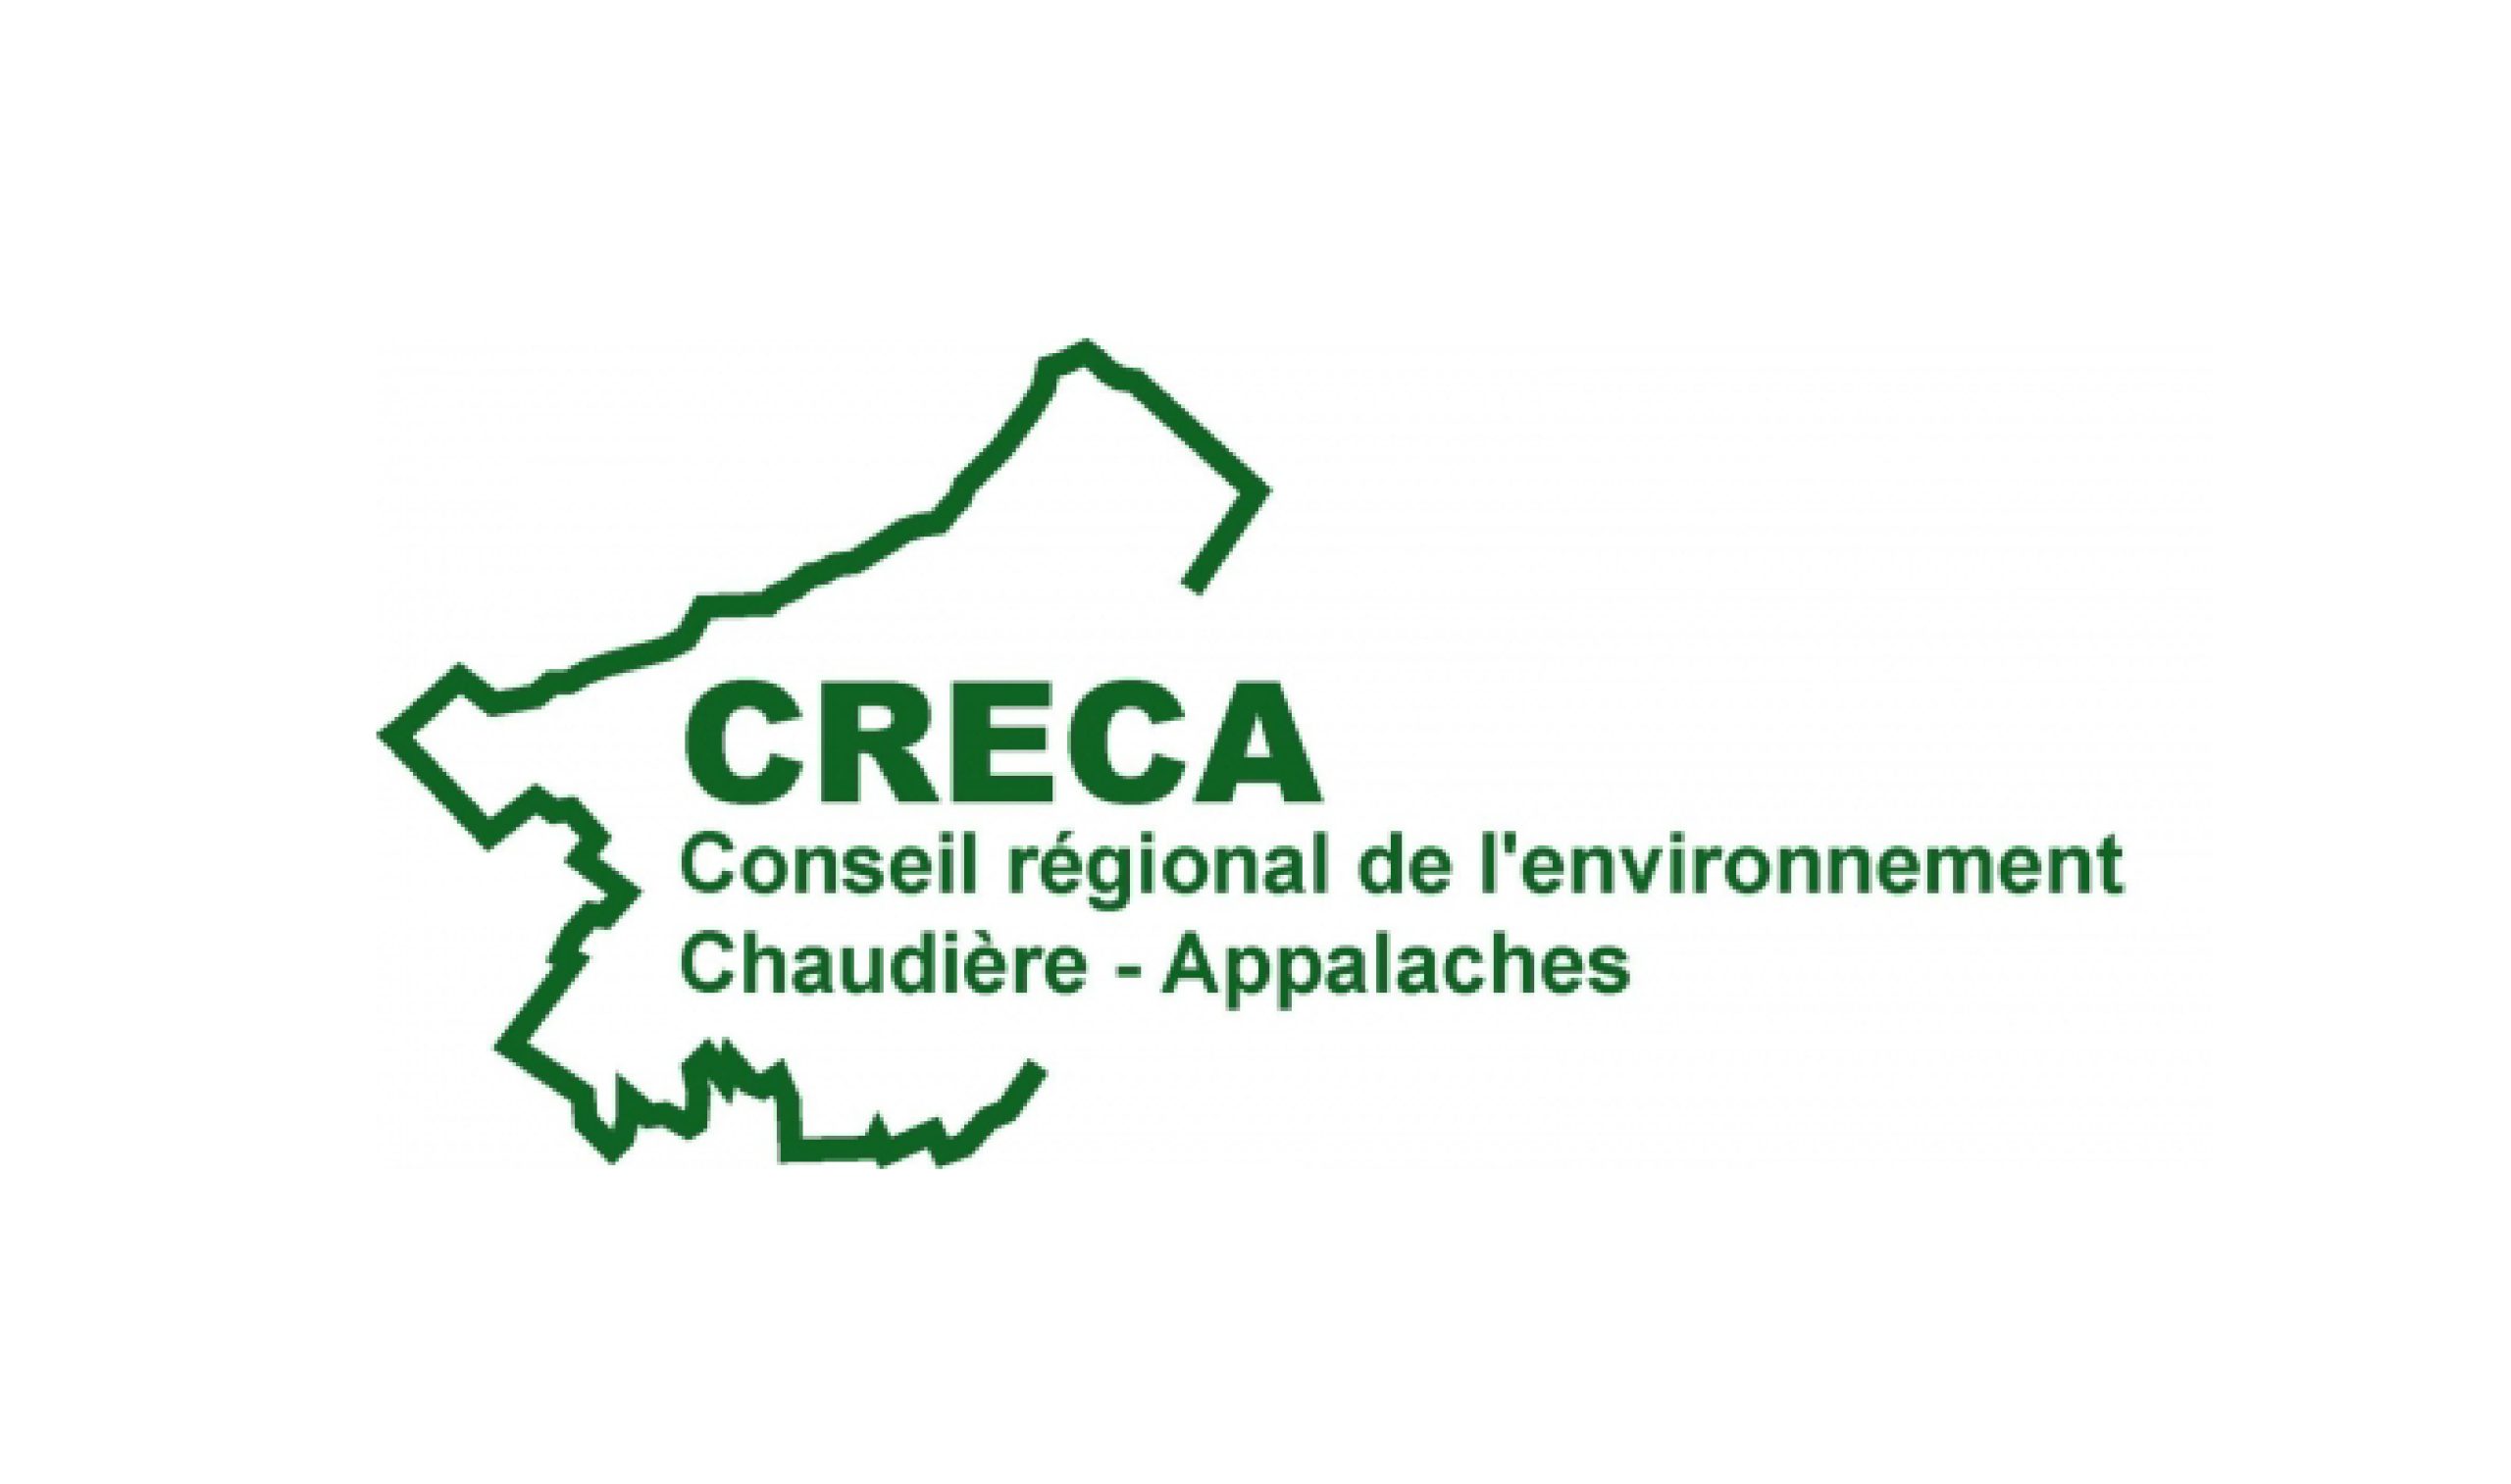 12-creca-Chaudiere-Appalaches-conseilregionaldelenvironnement-creca